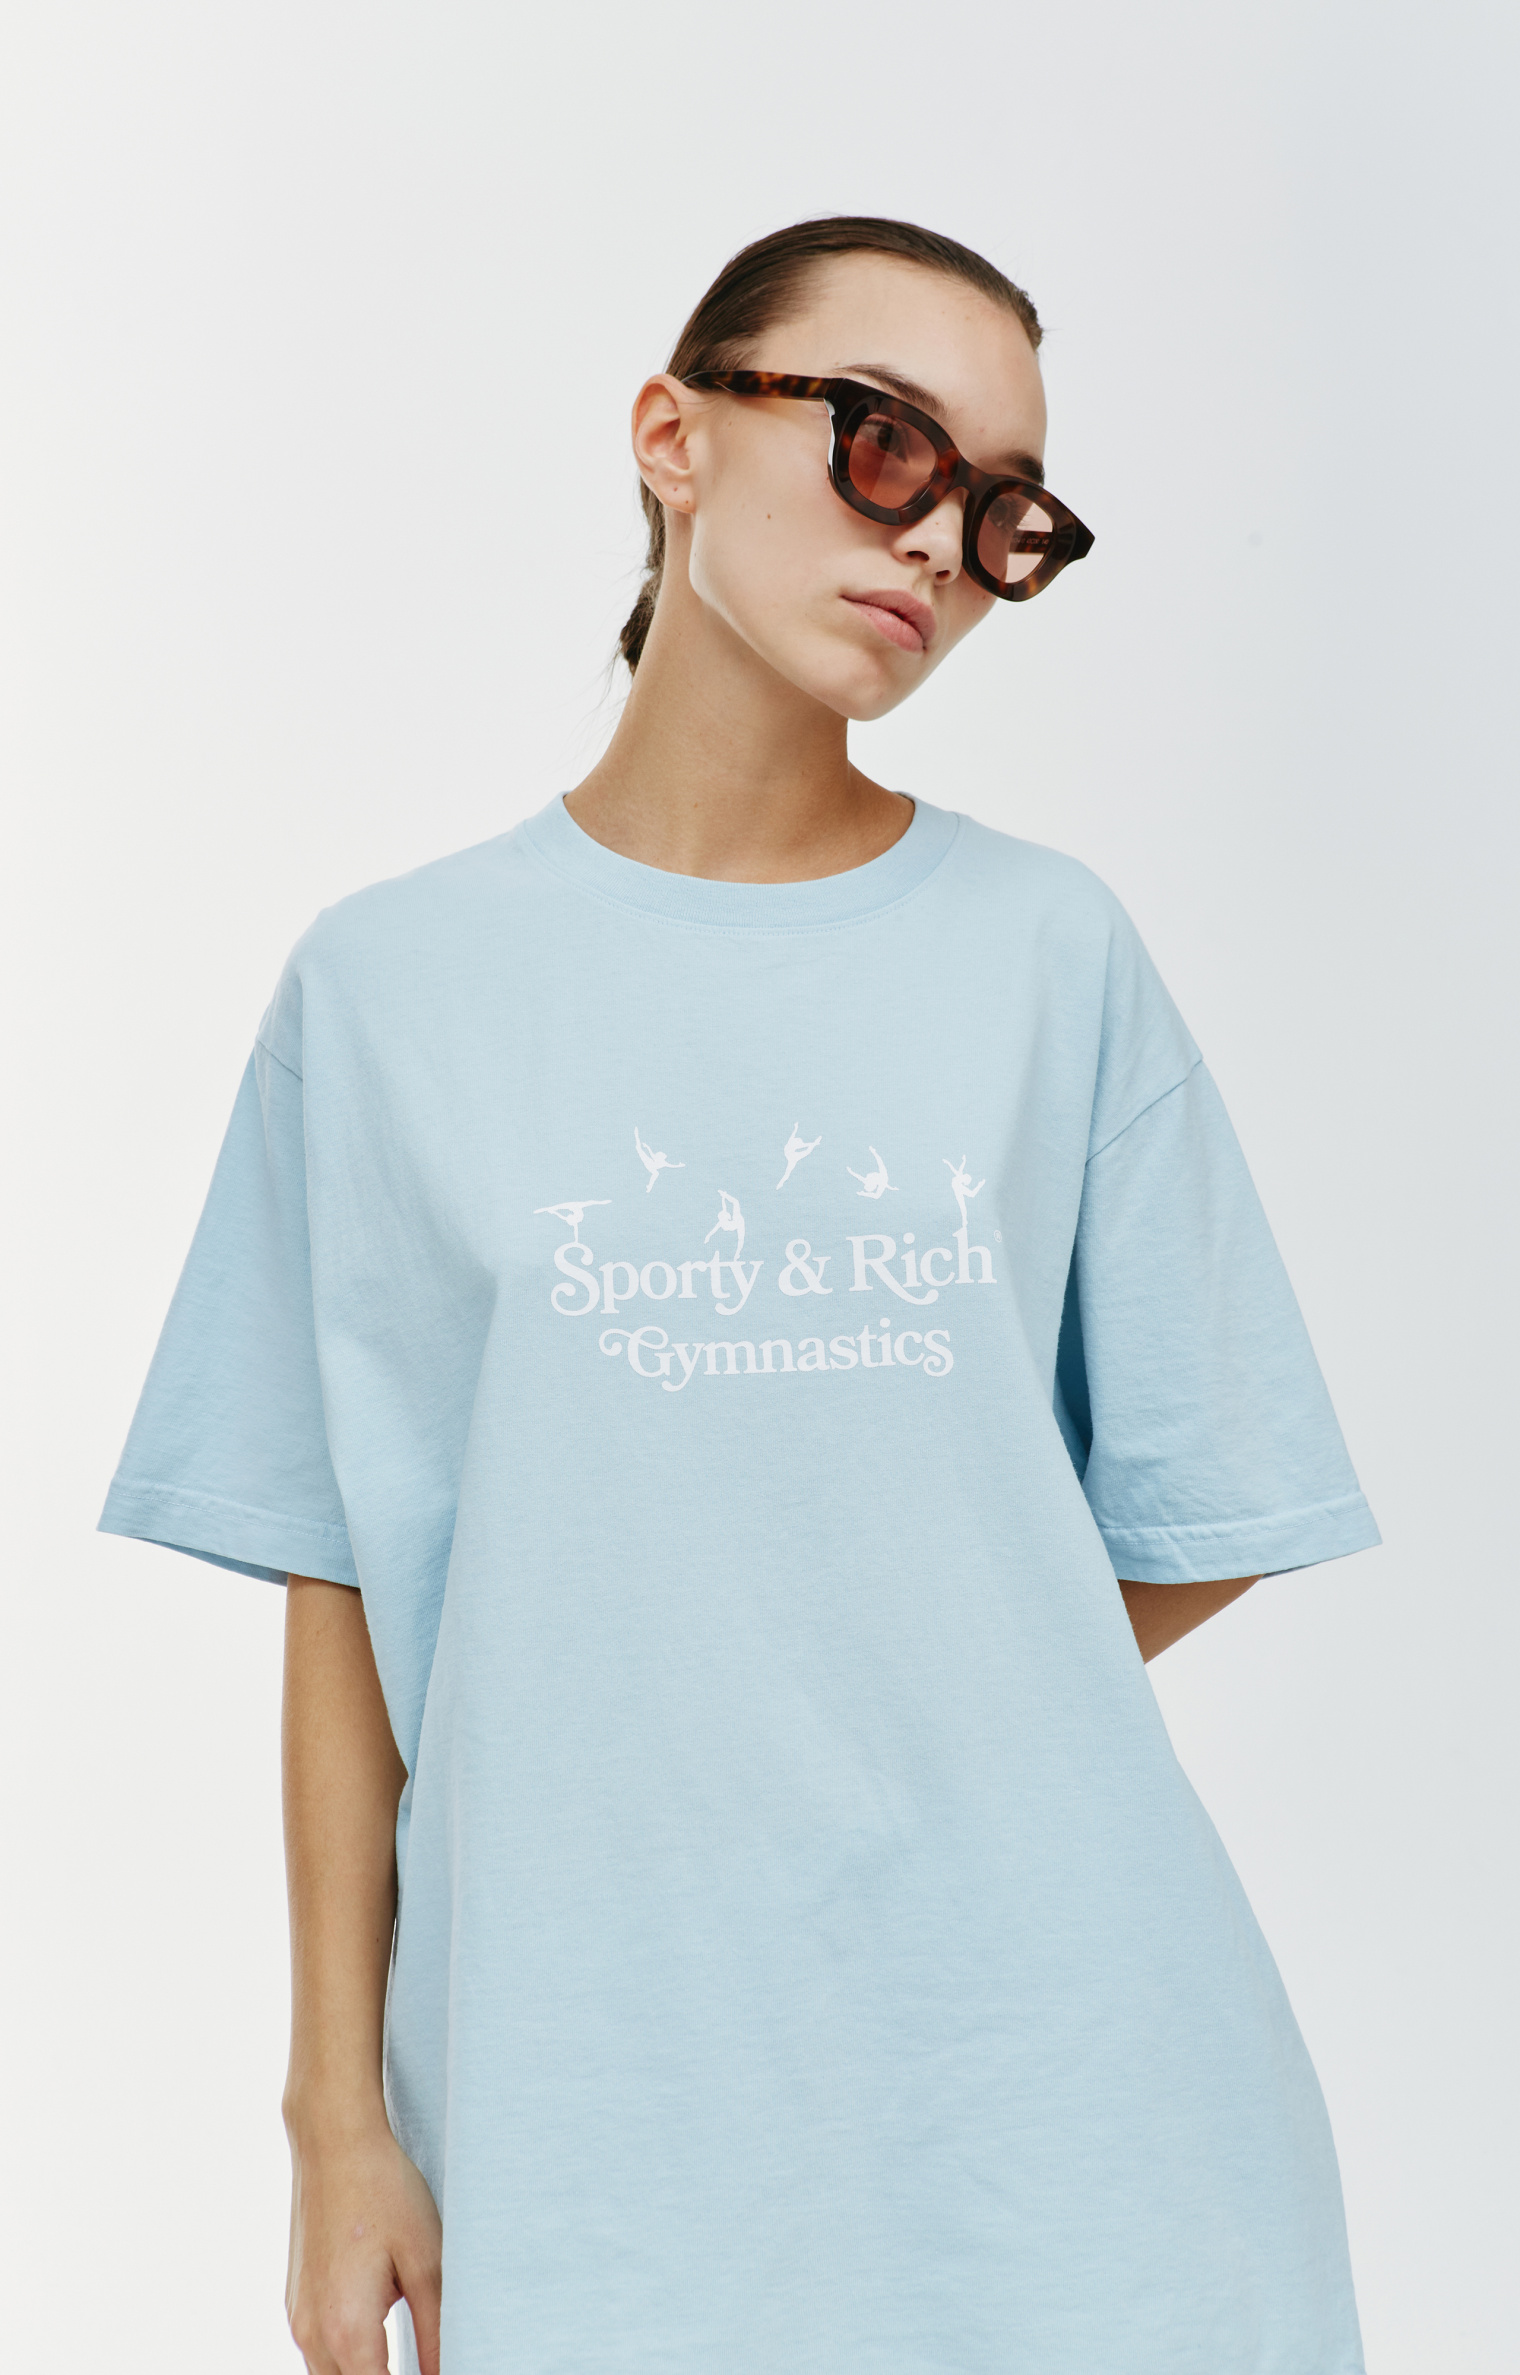 SPORTY & RICH SR Gymnactics T-Shirt